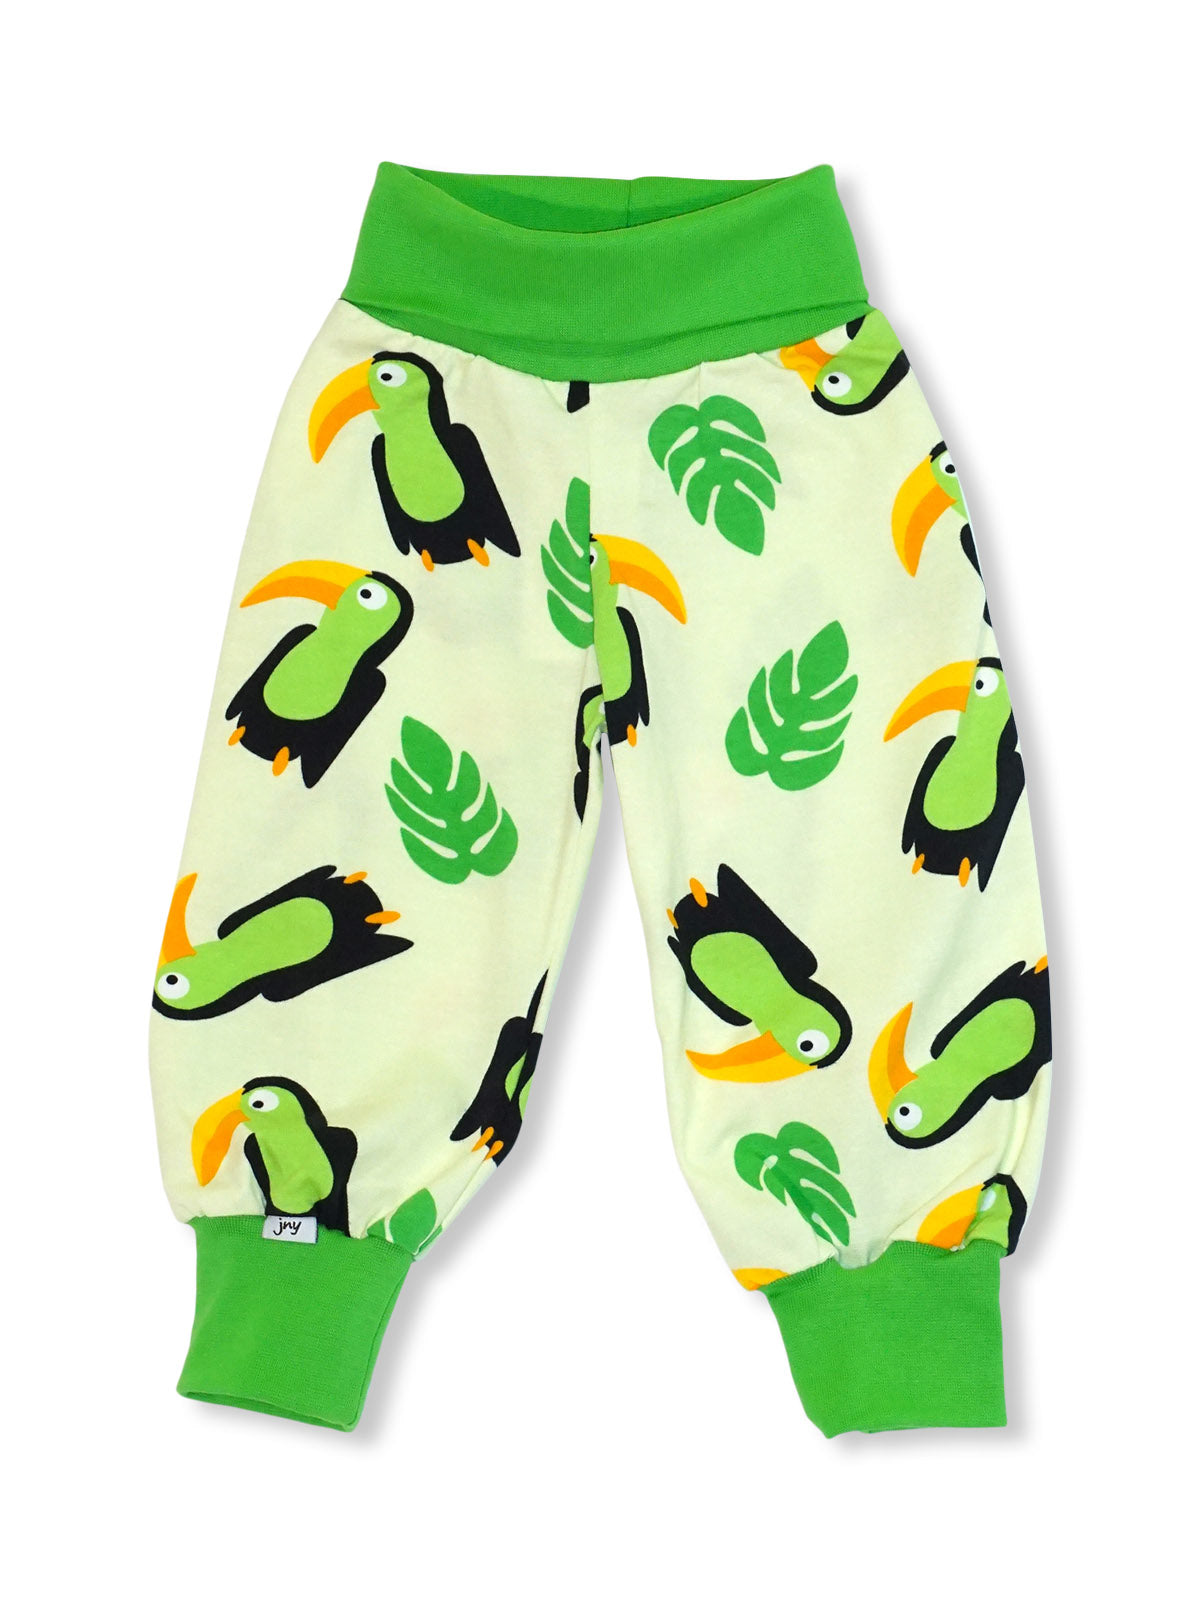 JNY - Comfy Pants - Aloha Toucan